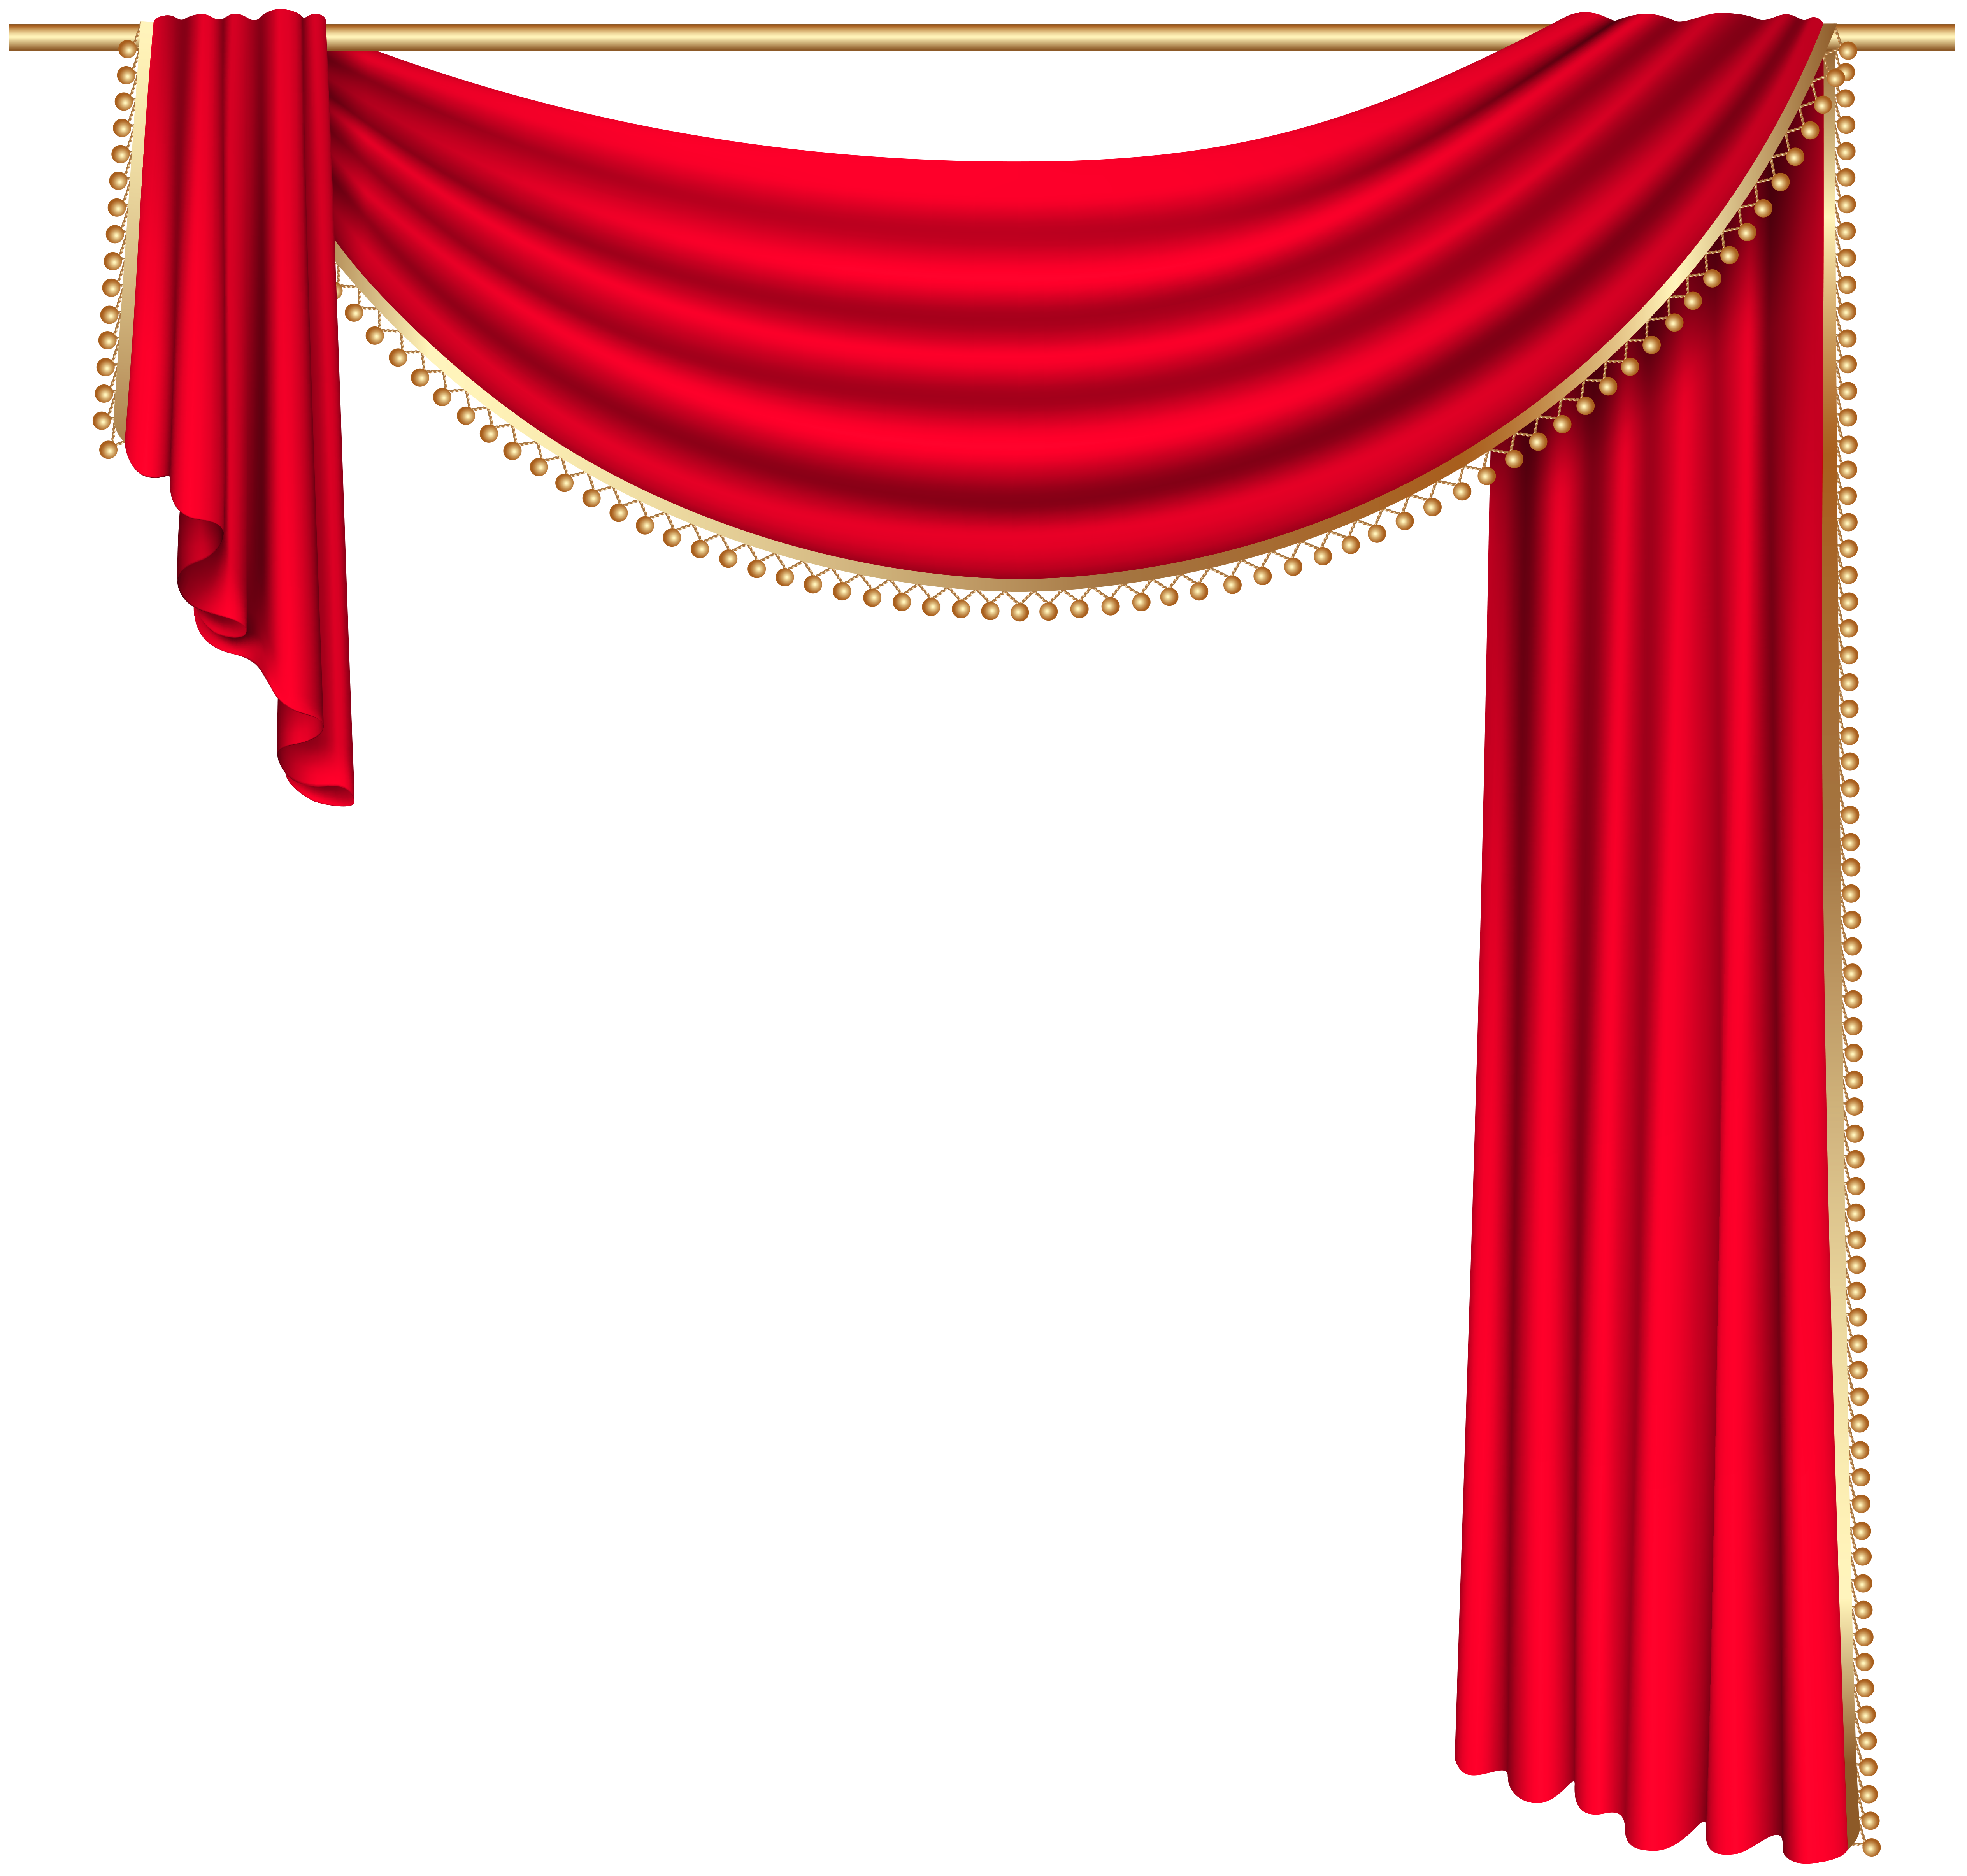 Red curtain transparent.